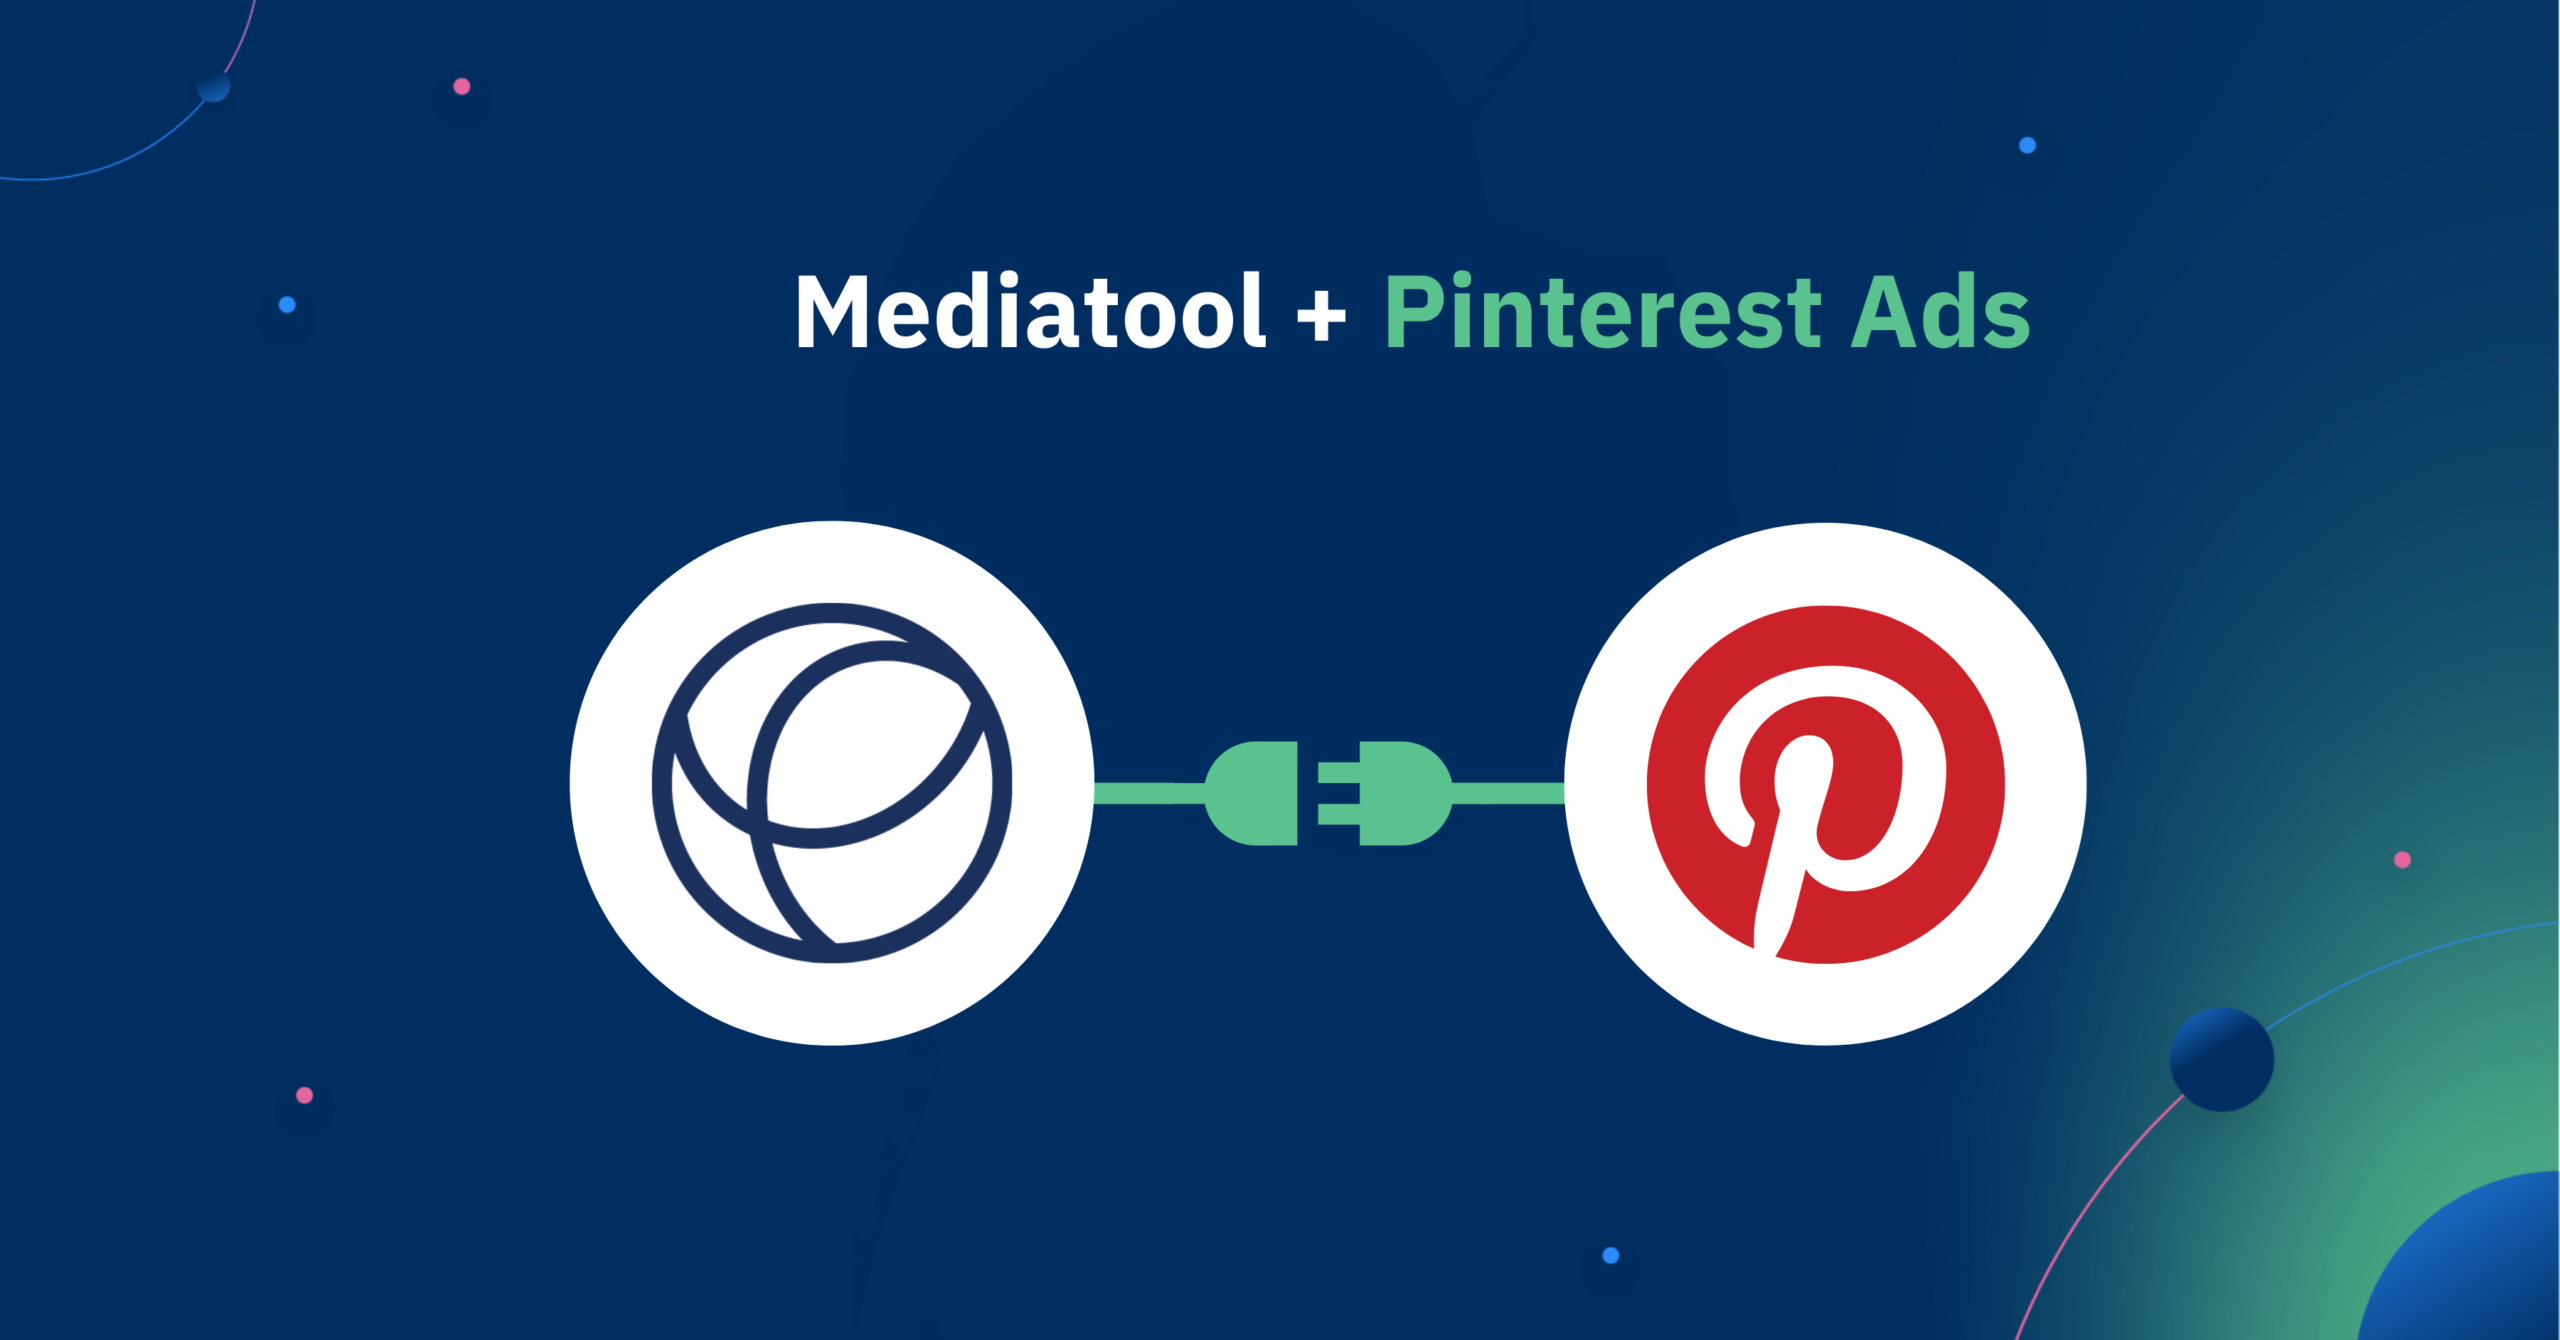 Mediatool and Pinterest Ads